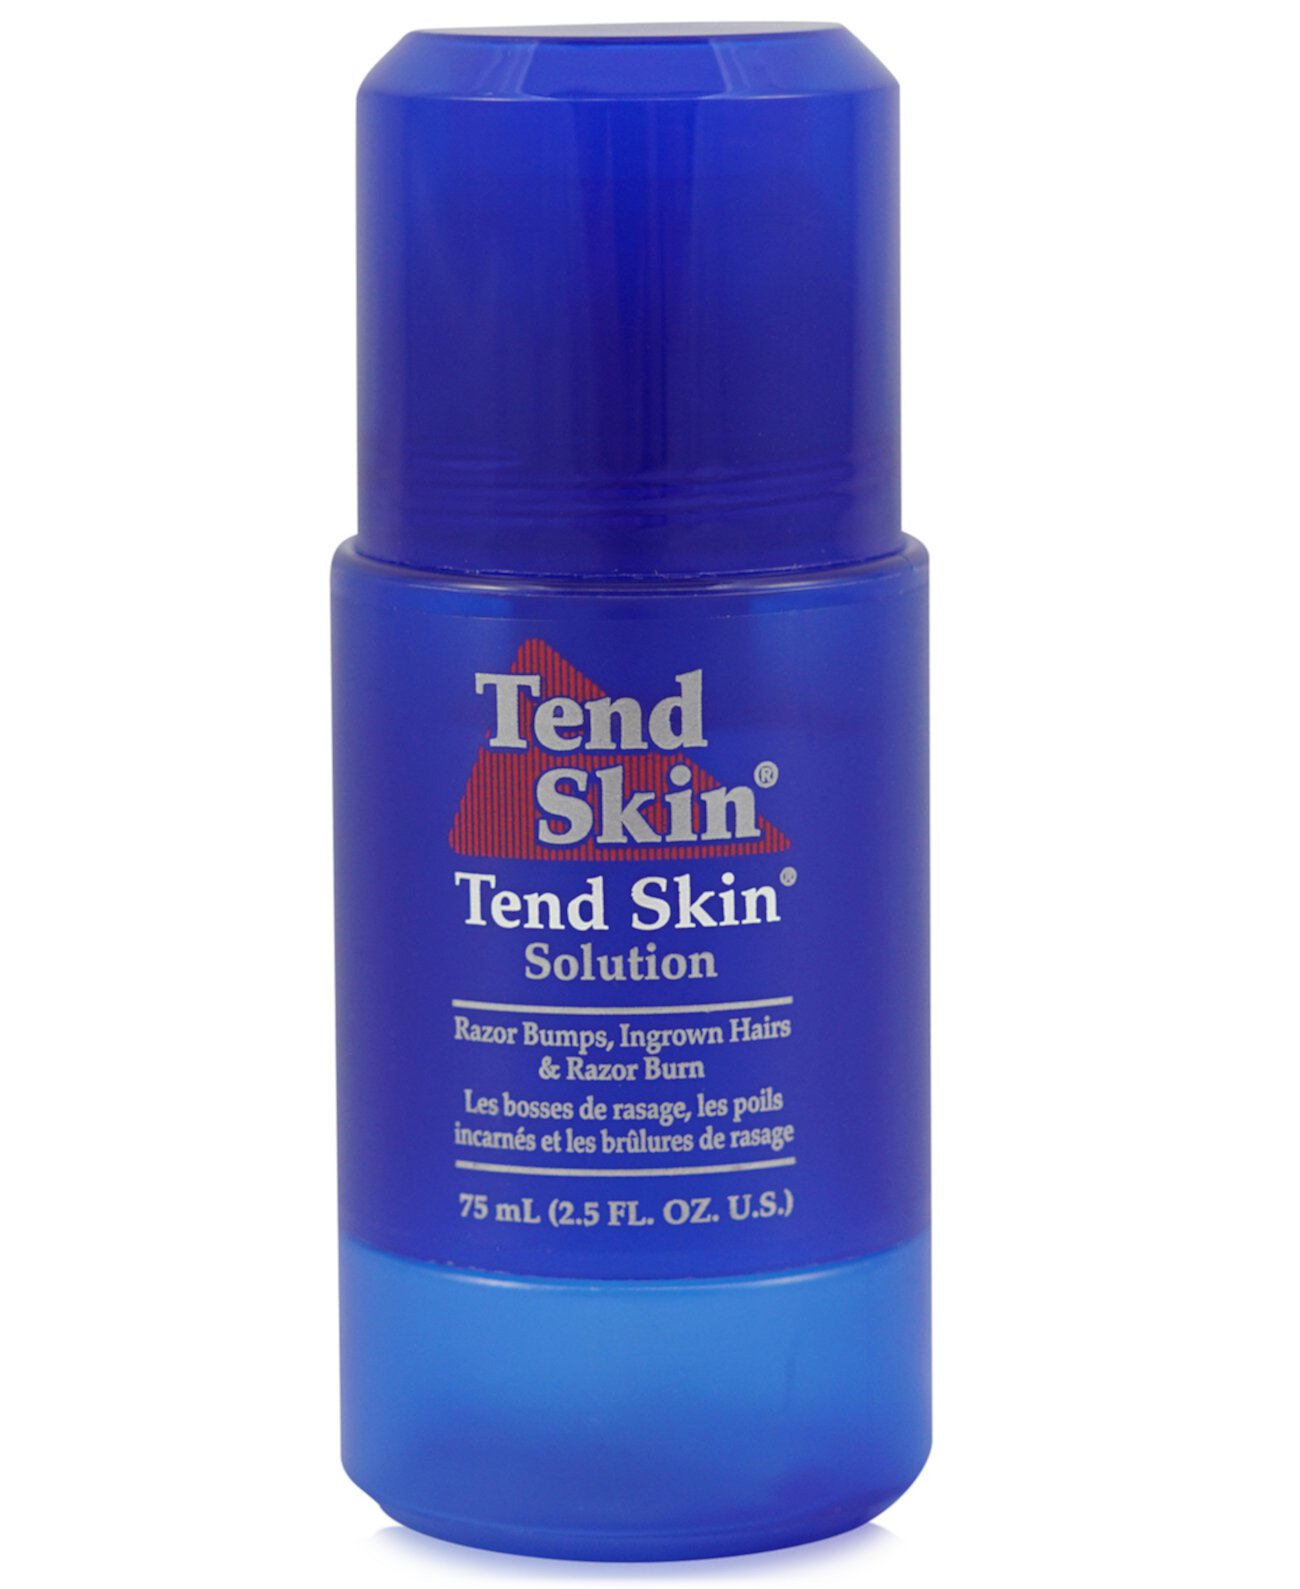 Многоразовая шариковая система Tend Skin, 2,5 унции, от PUREBEAUTY Salon & Spa Beautique Tend skin